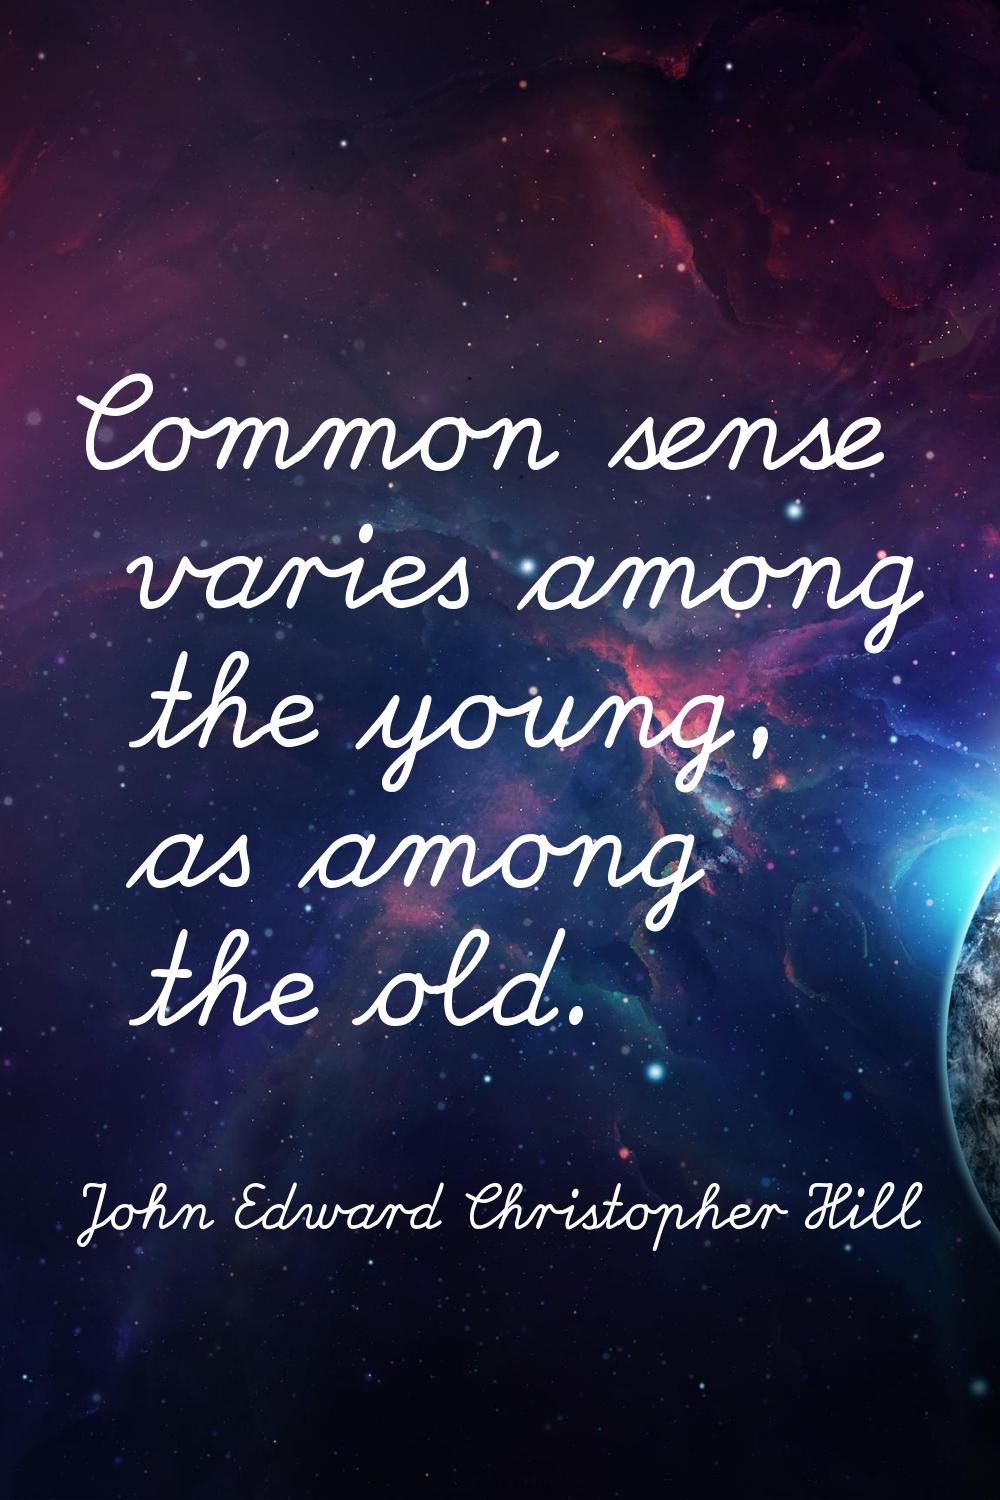 Common sense varies among the young, as among the old.